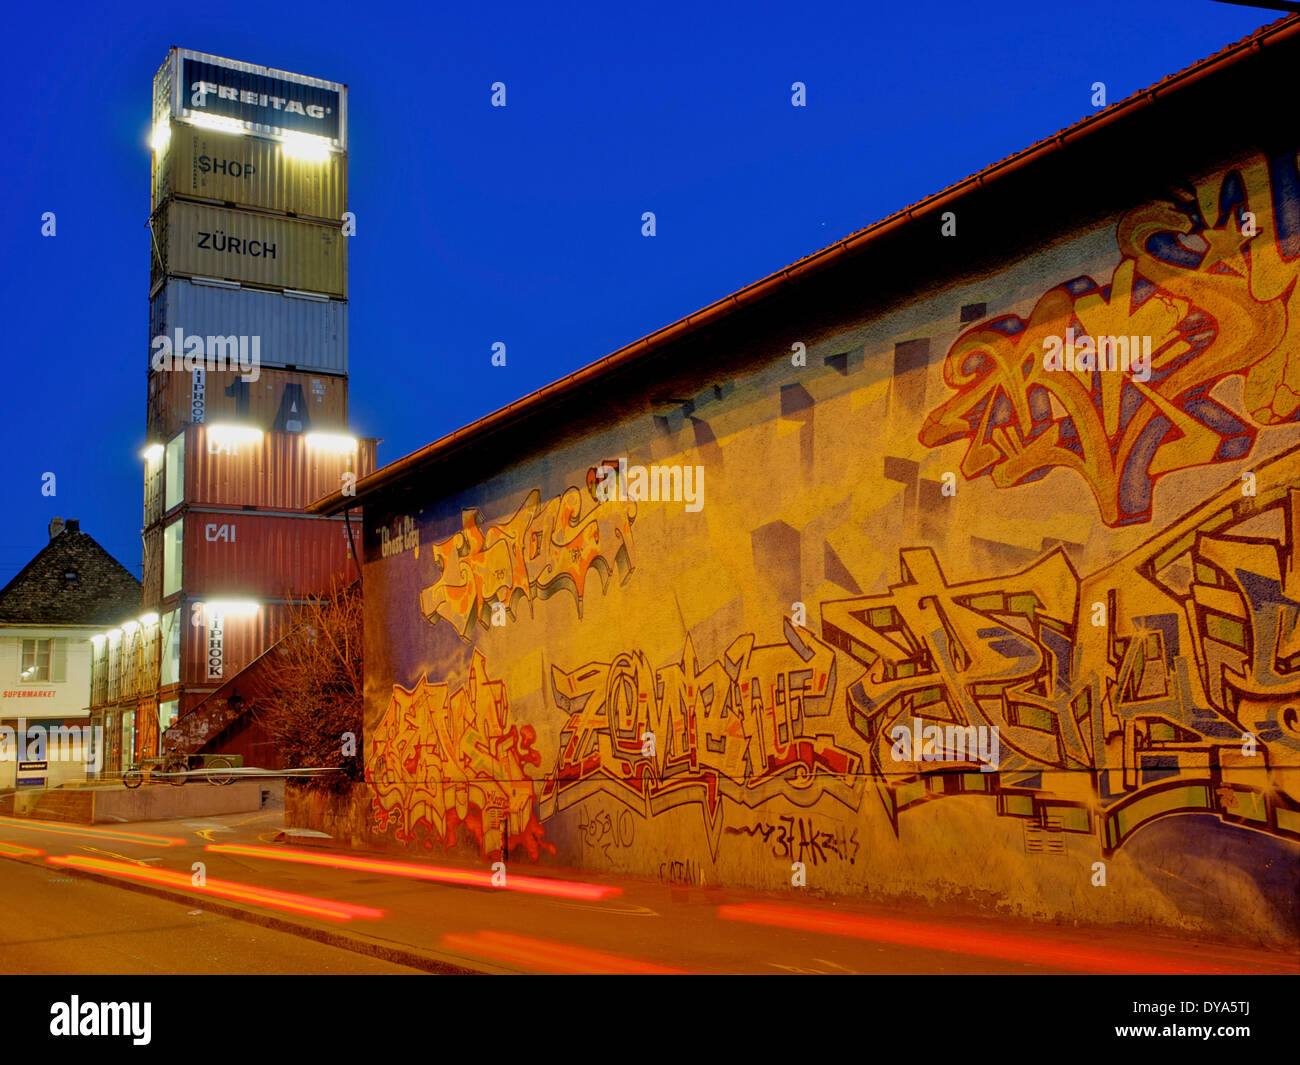 Switzerland, Europe, canton Zurich, evening, pocket manufacturer, container, Friday, graffiti, shop, wall Stock Photo